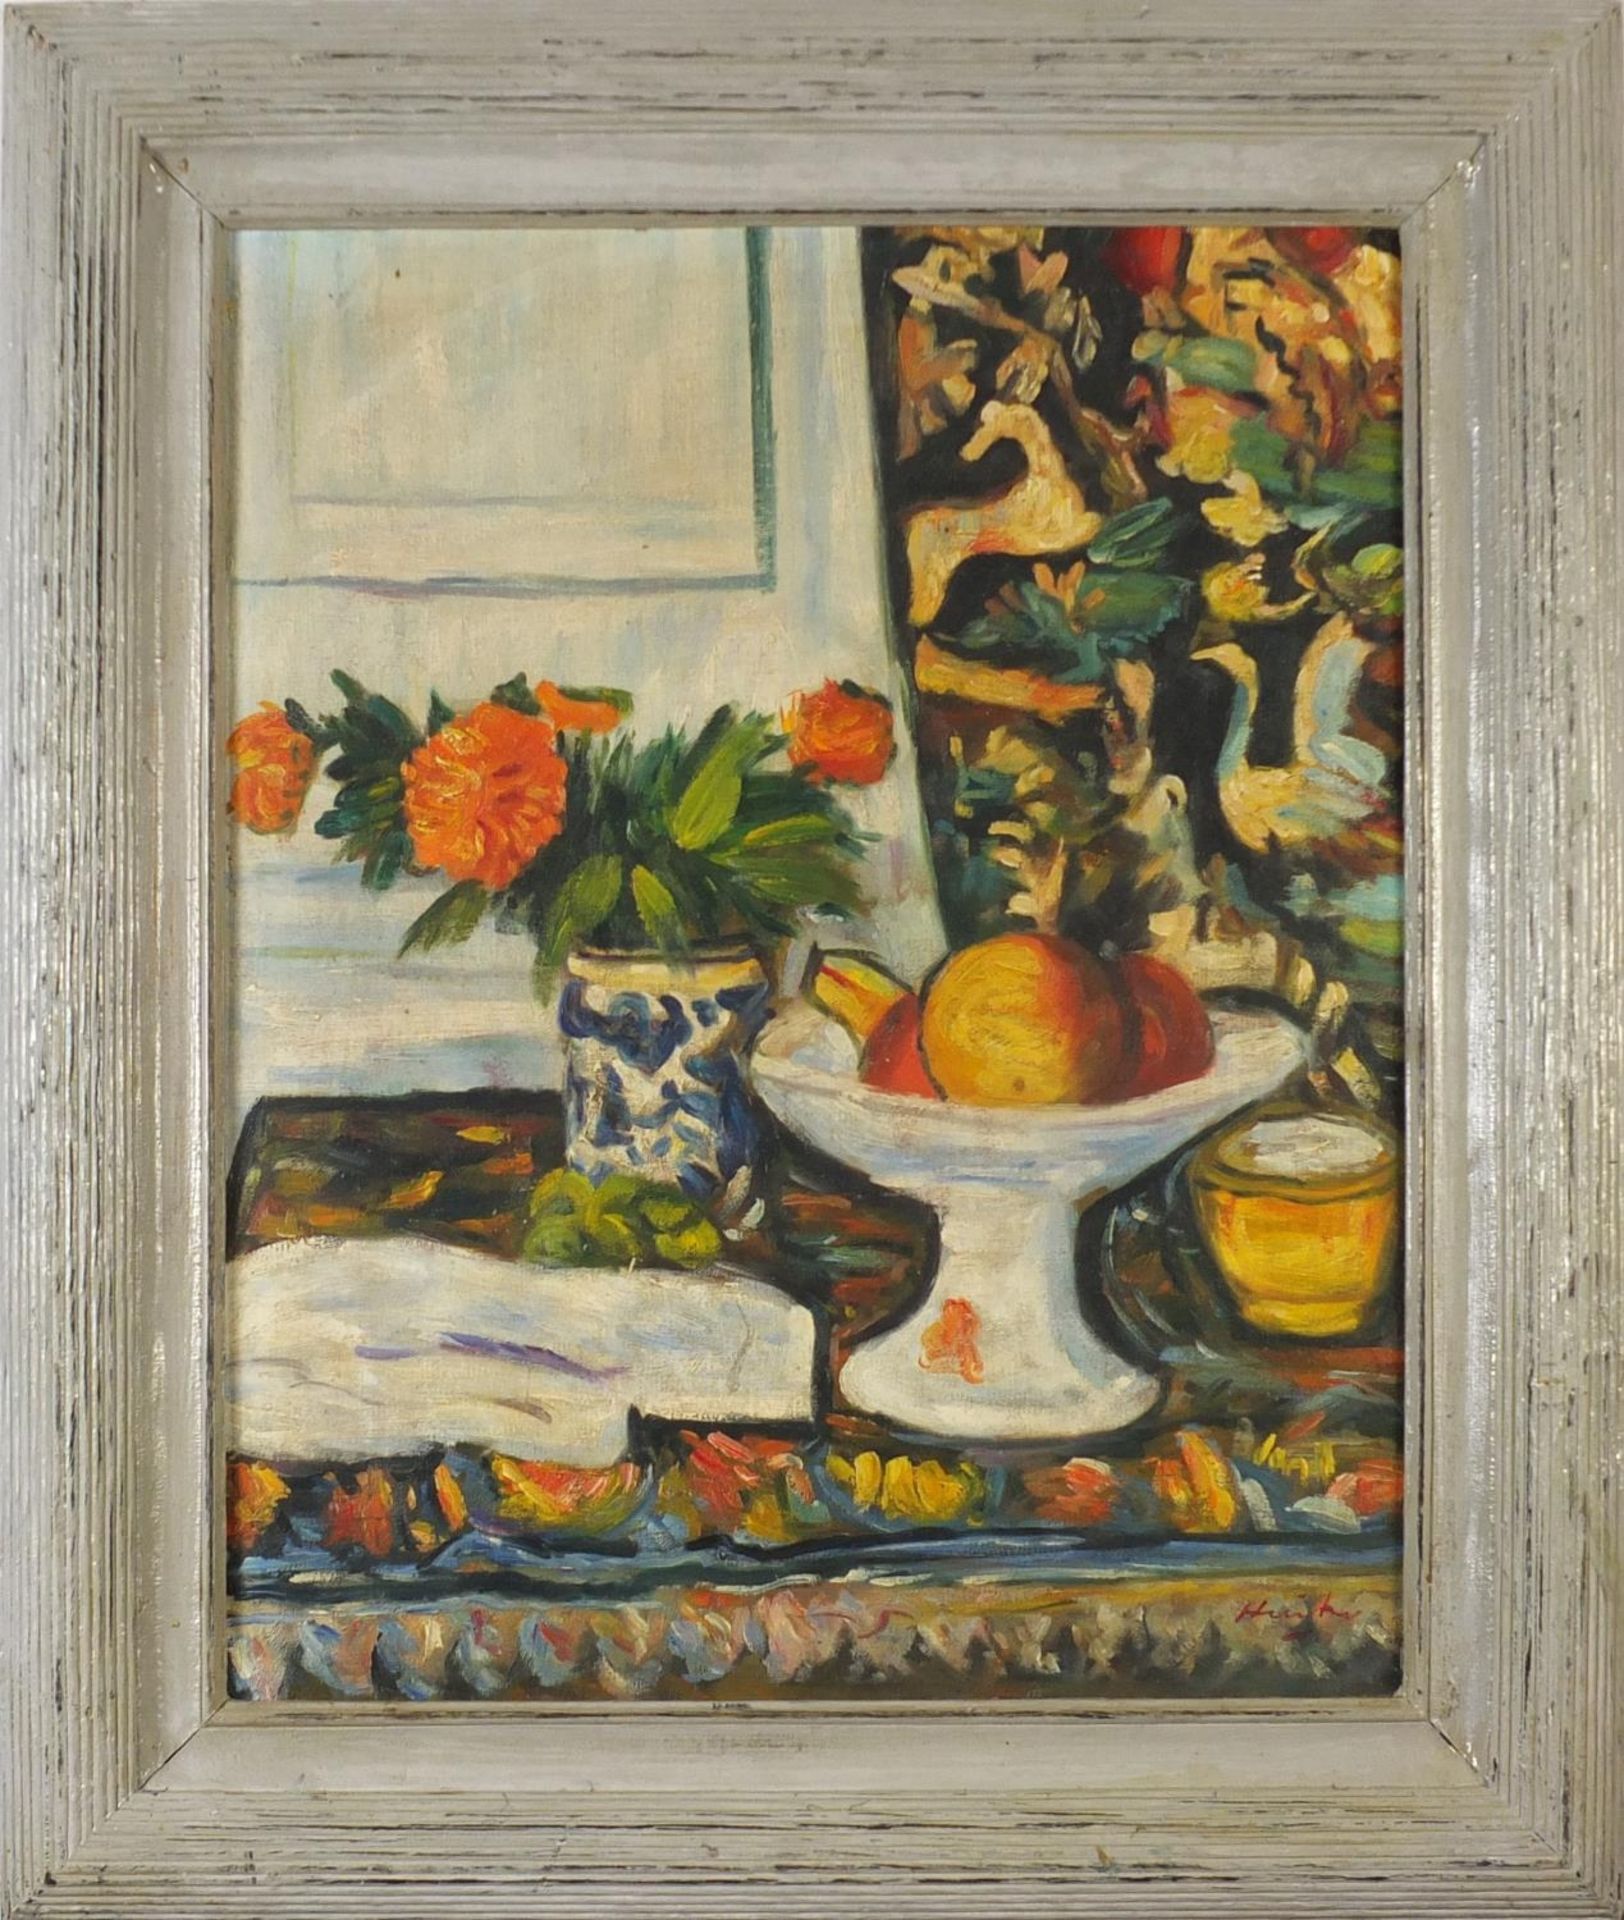 Manner of George Leslie Hunter - Still life fruit, flowers and vessels, Scottish Colourist school - Image 2 of 4